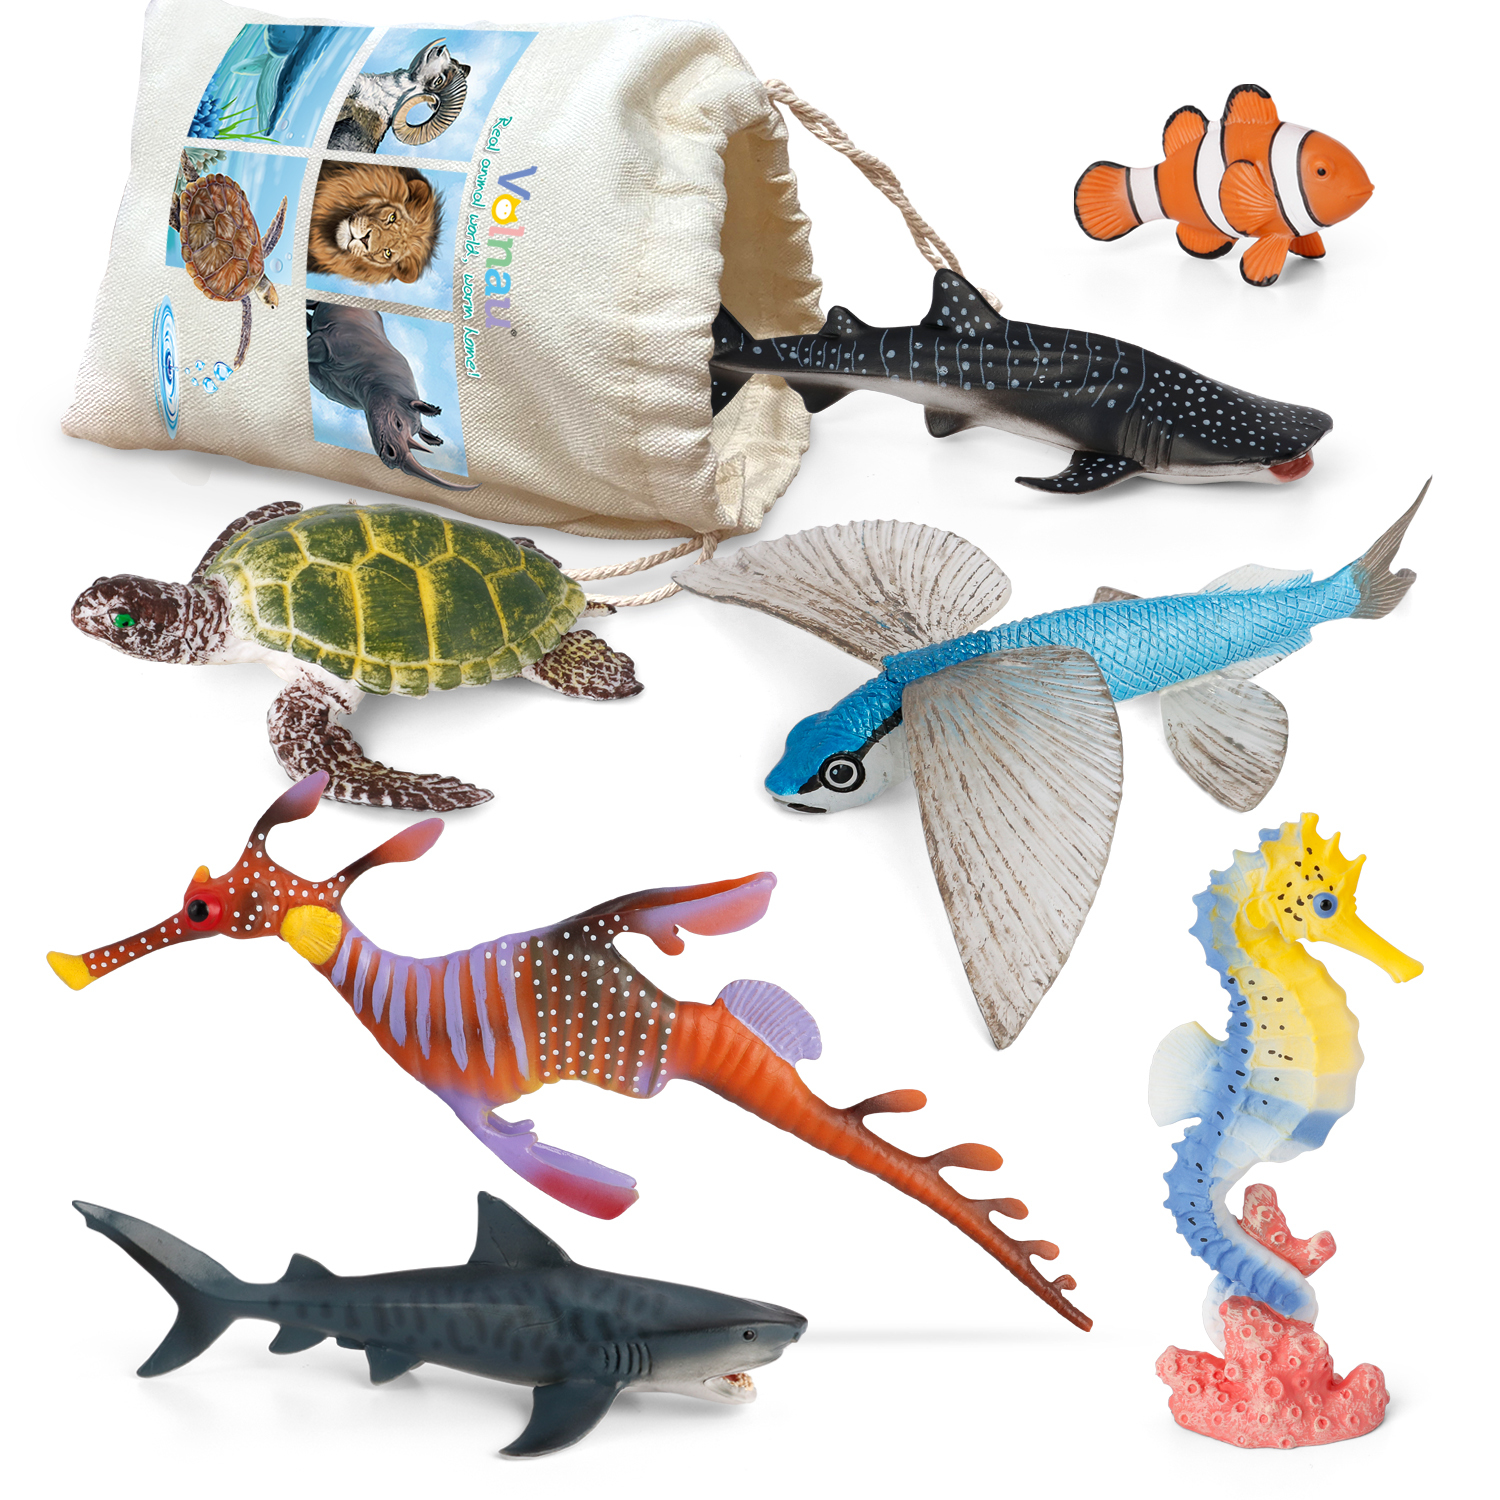 3 x Turtle Realistic Ocean Animals Model Sea Life Figurines Educational Kids Toy 